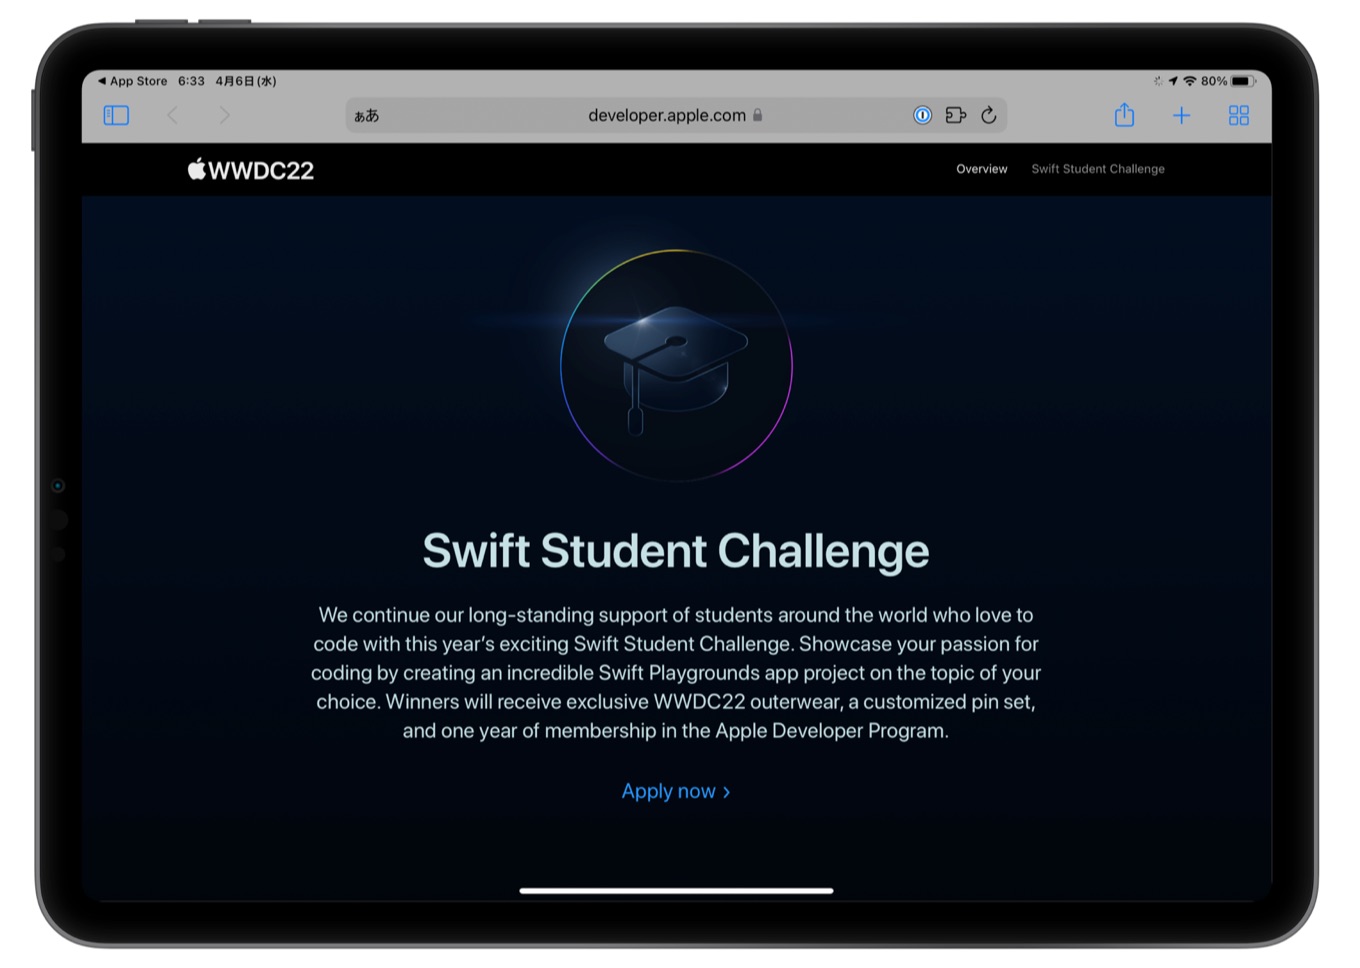 WWDC22 Swift Student Challenge